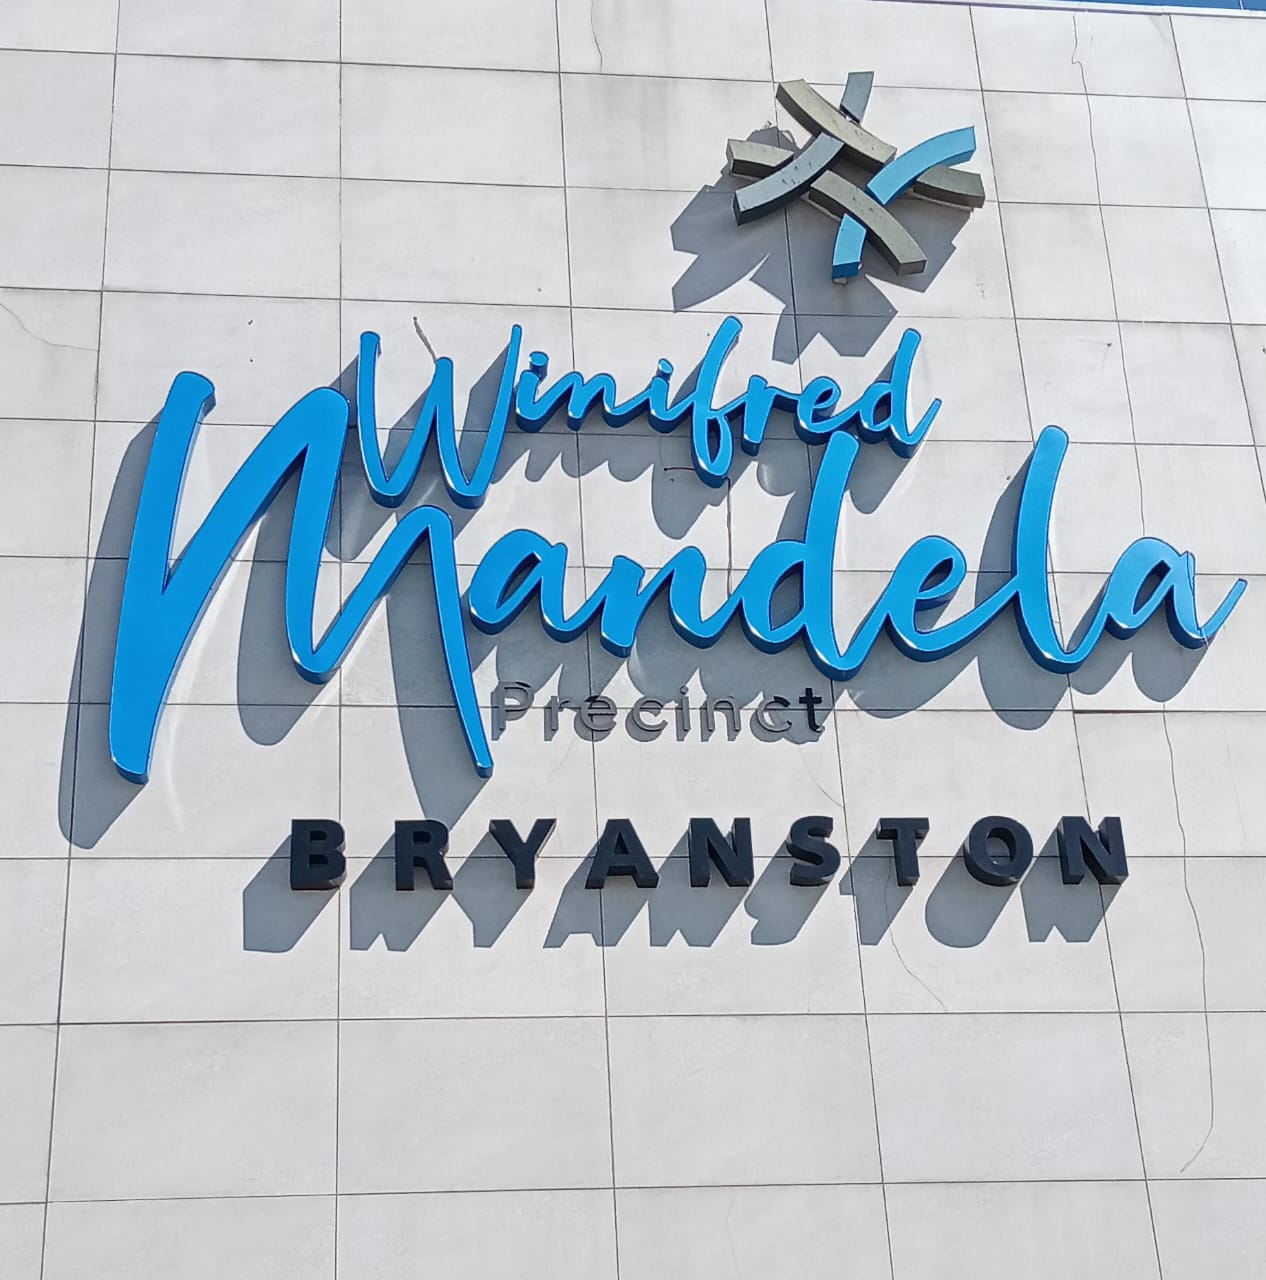 Transformation In Johannesburg: Nicolway Centre Becomes Winifred Mandela Precinct 9